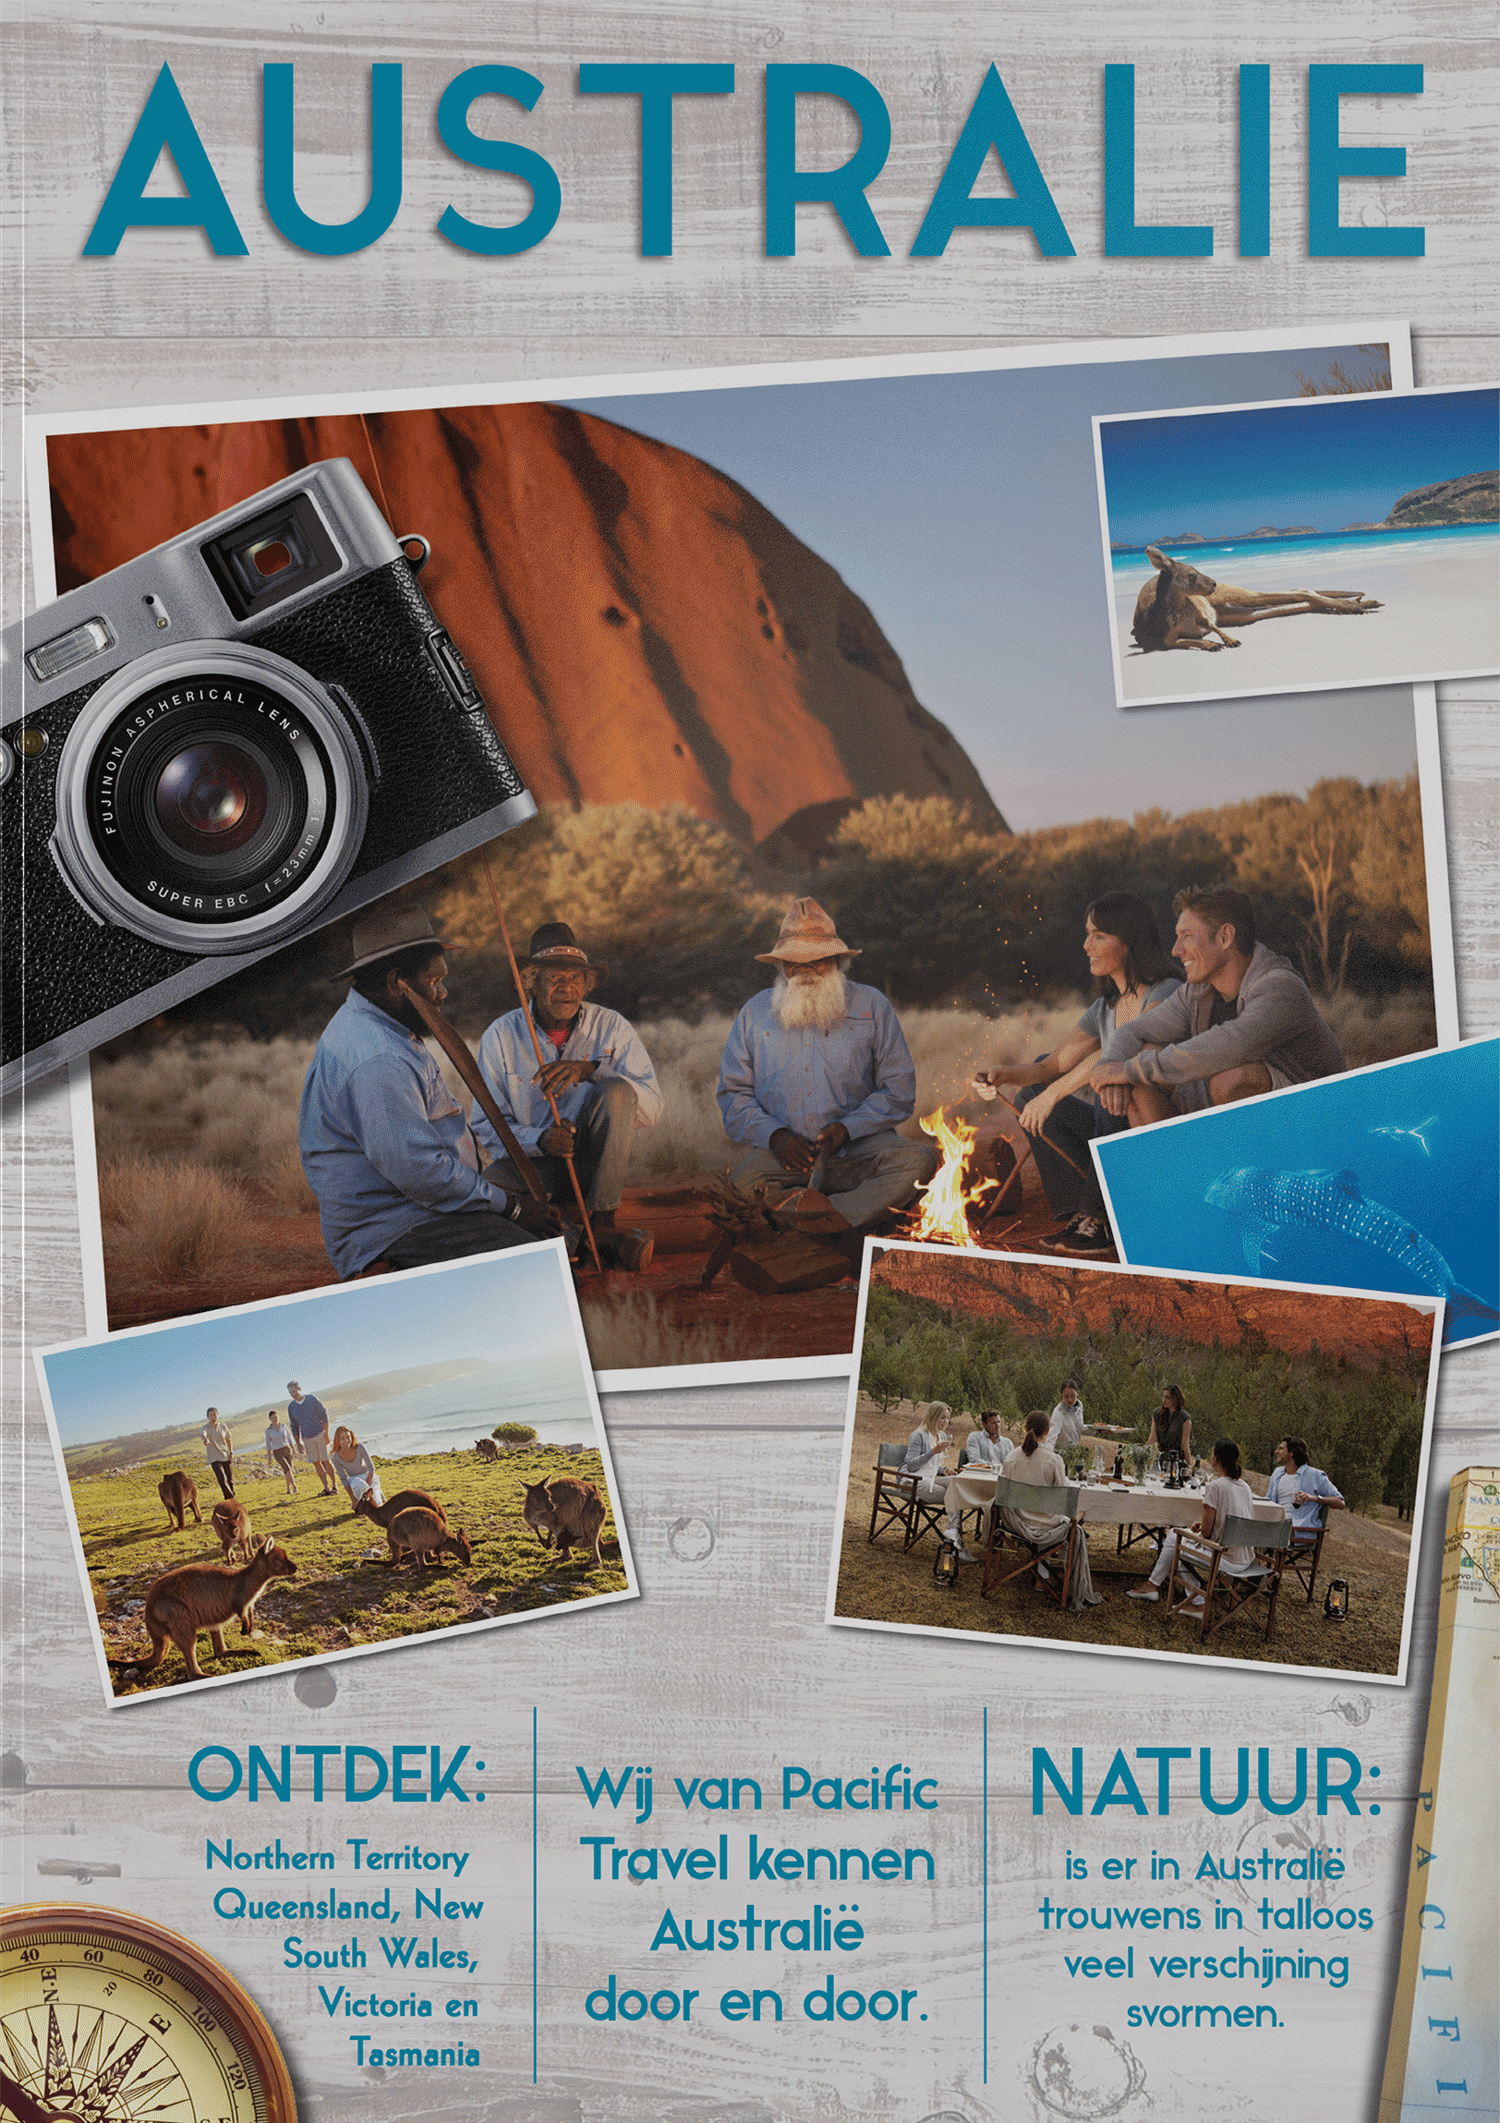 Pacific Travel's Australian brochure cover